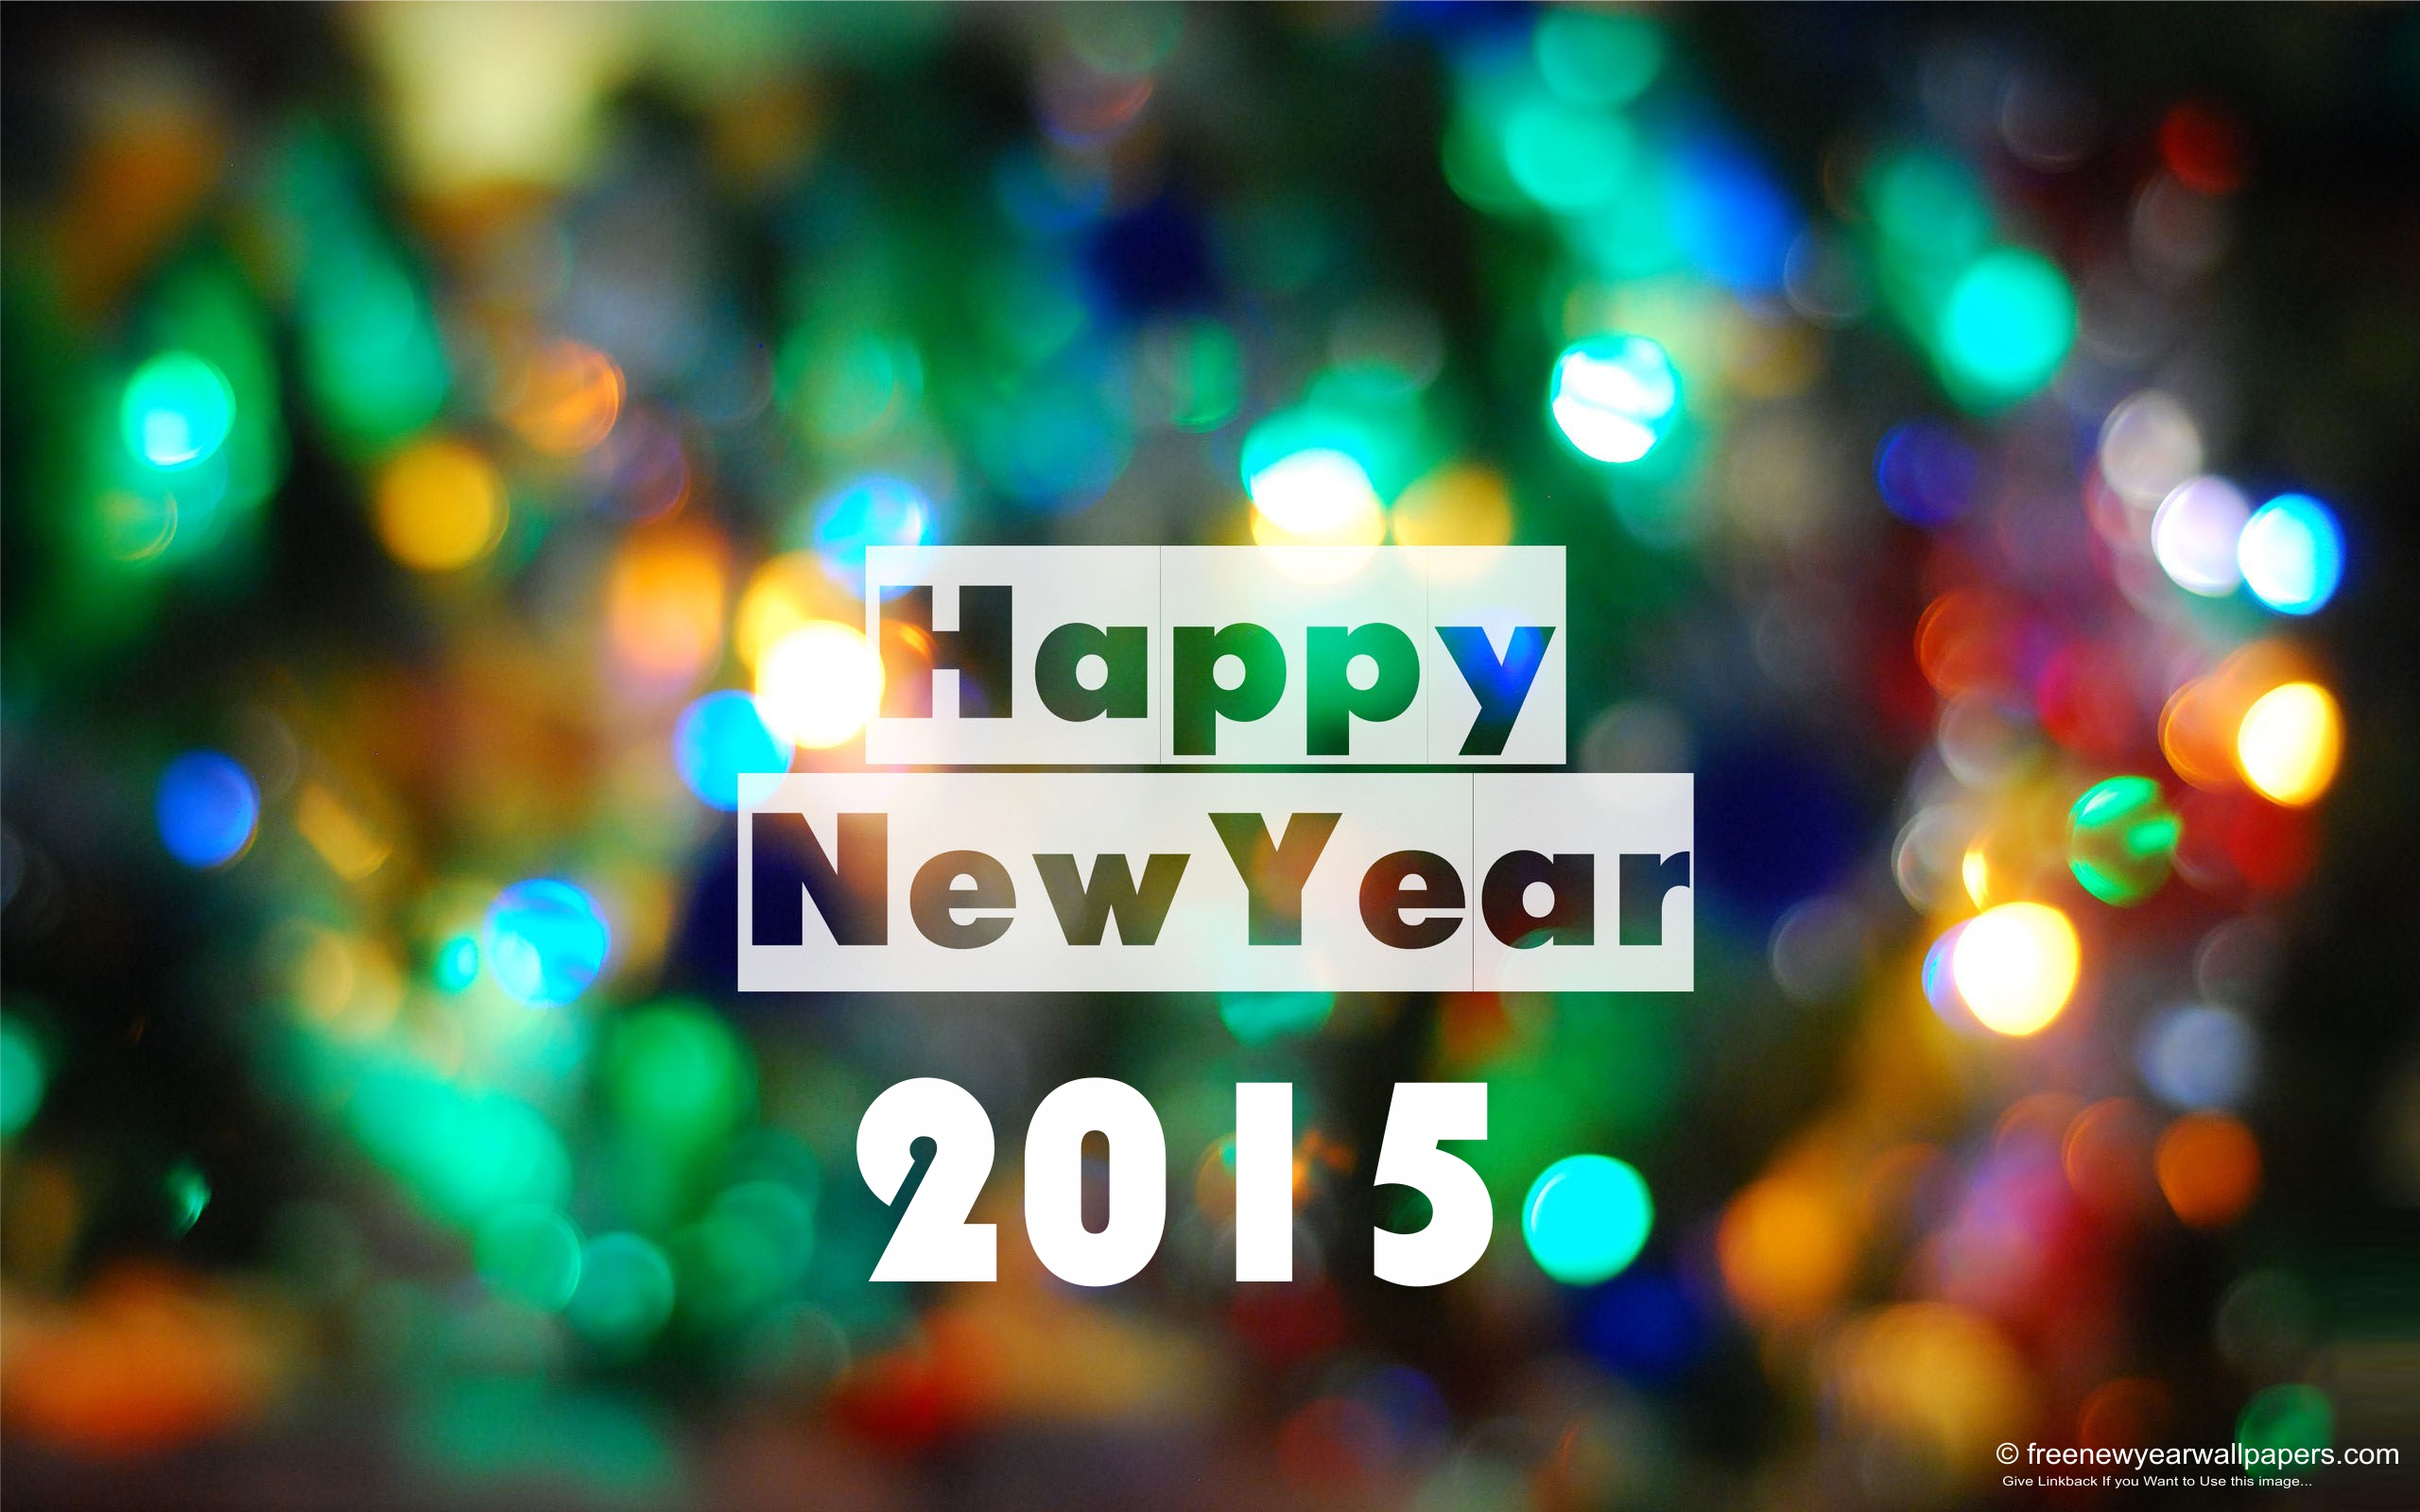 Happy New Year 2015wallpaper For Desktop